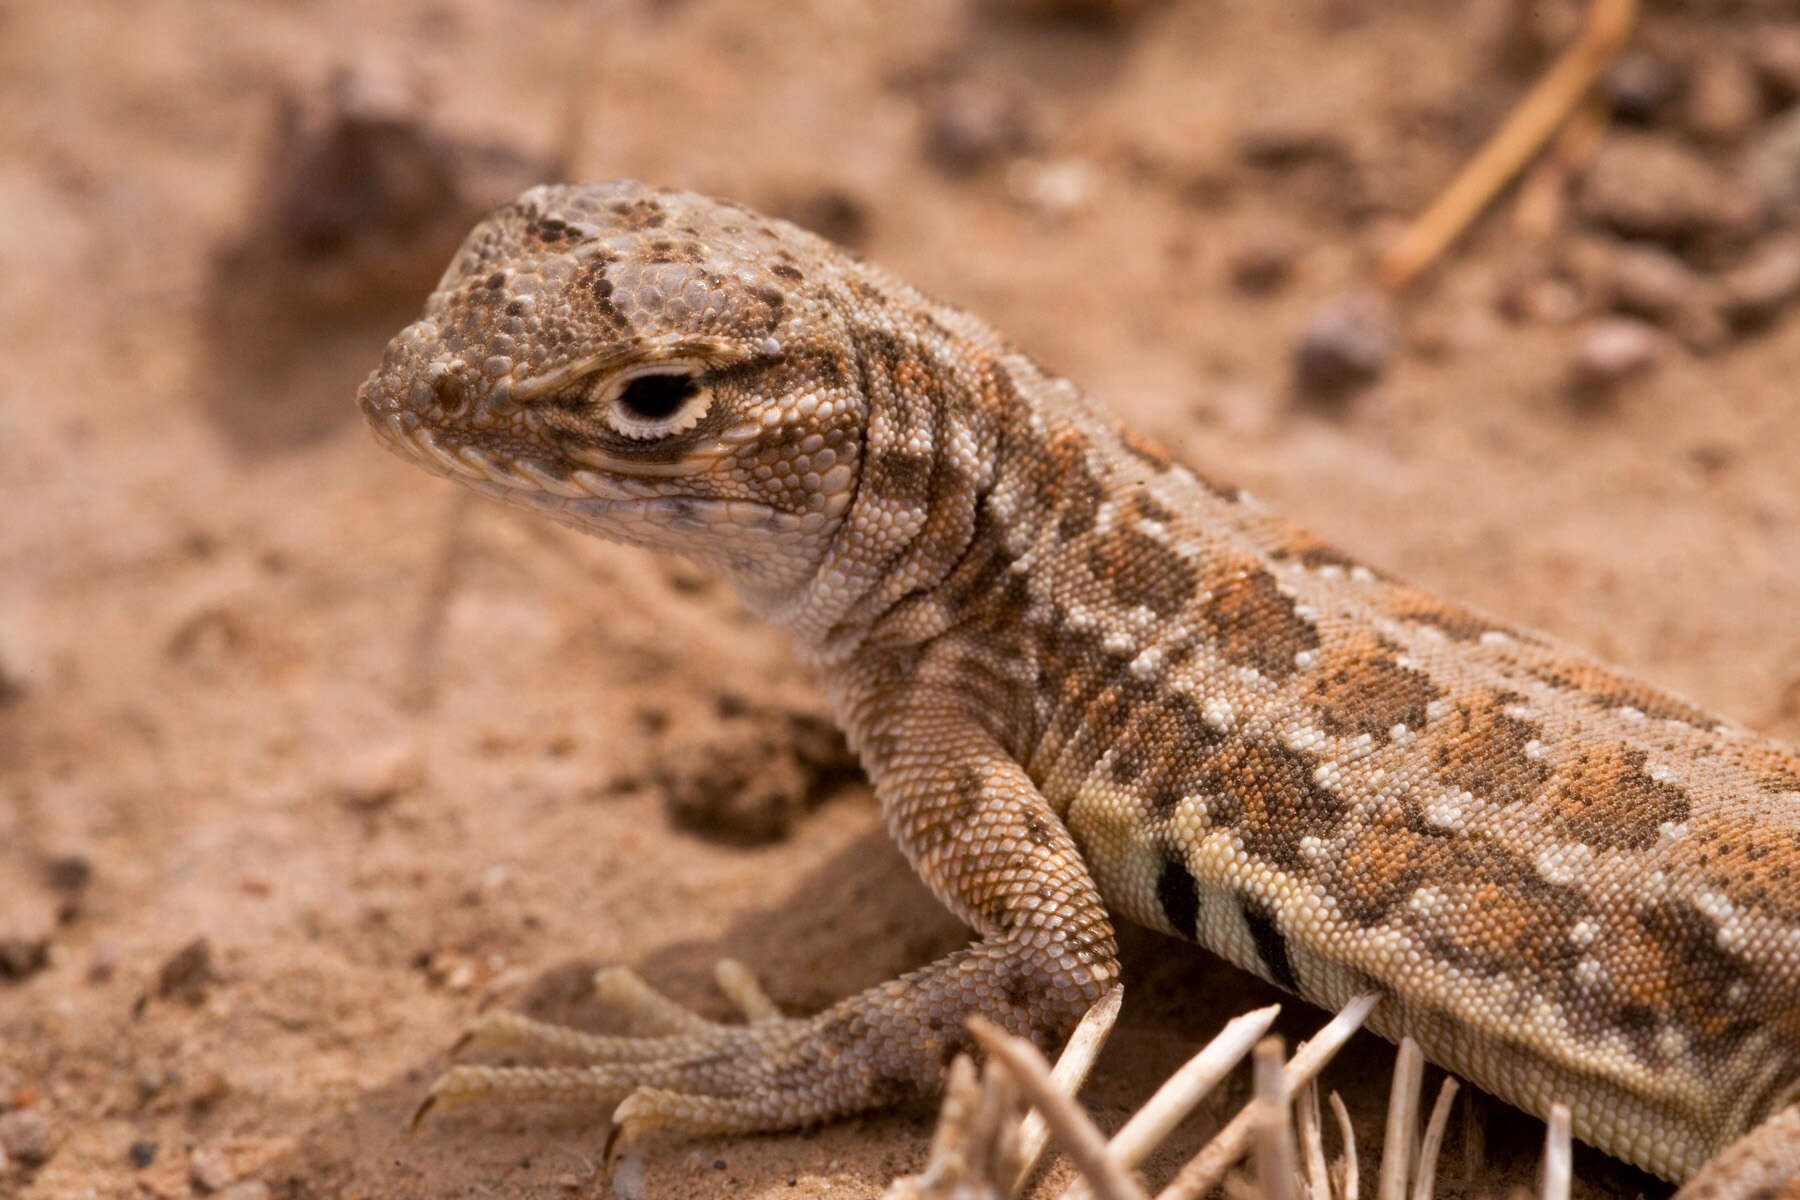 Image of Lesser Earless Lizard